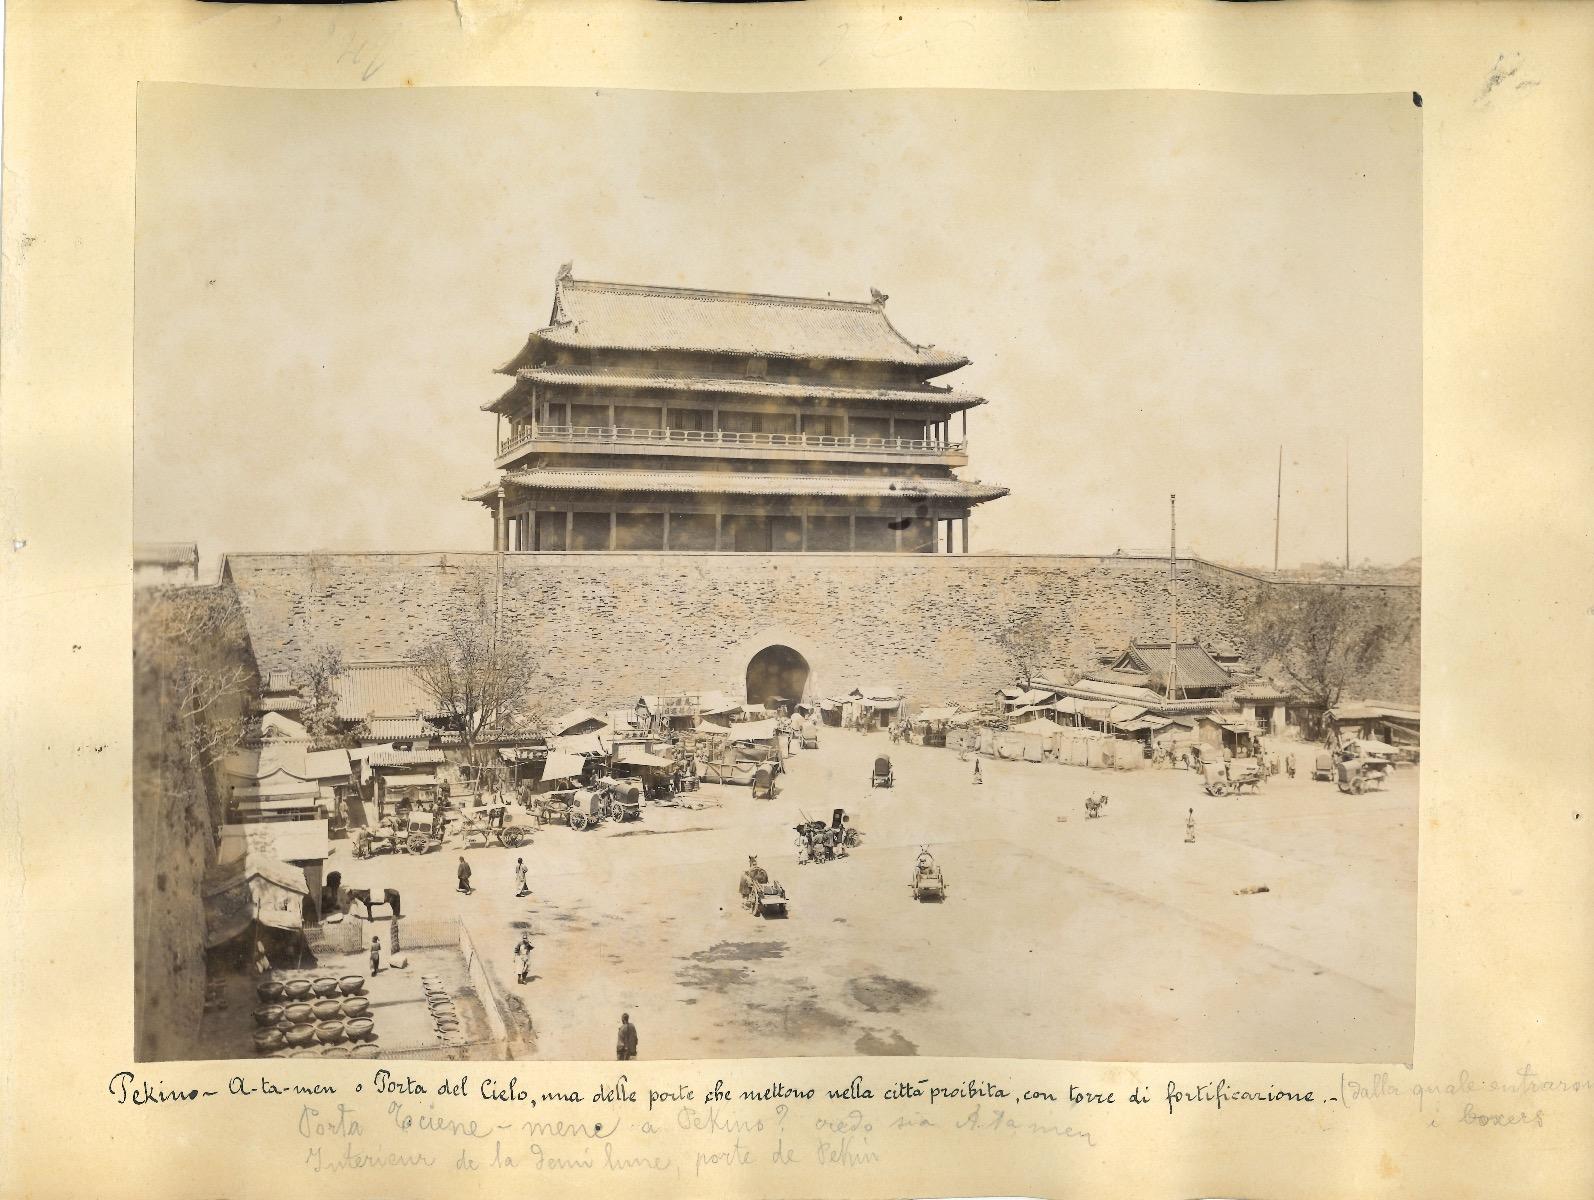 Unknown Landscape Photograph - Ancient Views of Beijing - Forbidden City - Original Albumen Print - 1890s